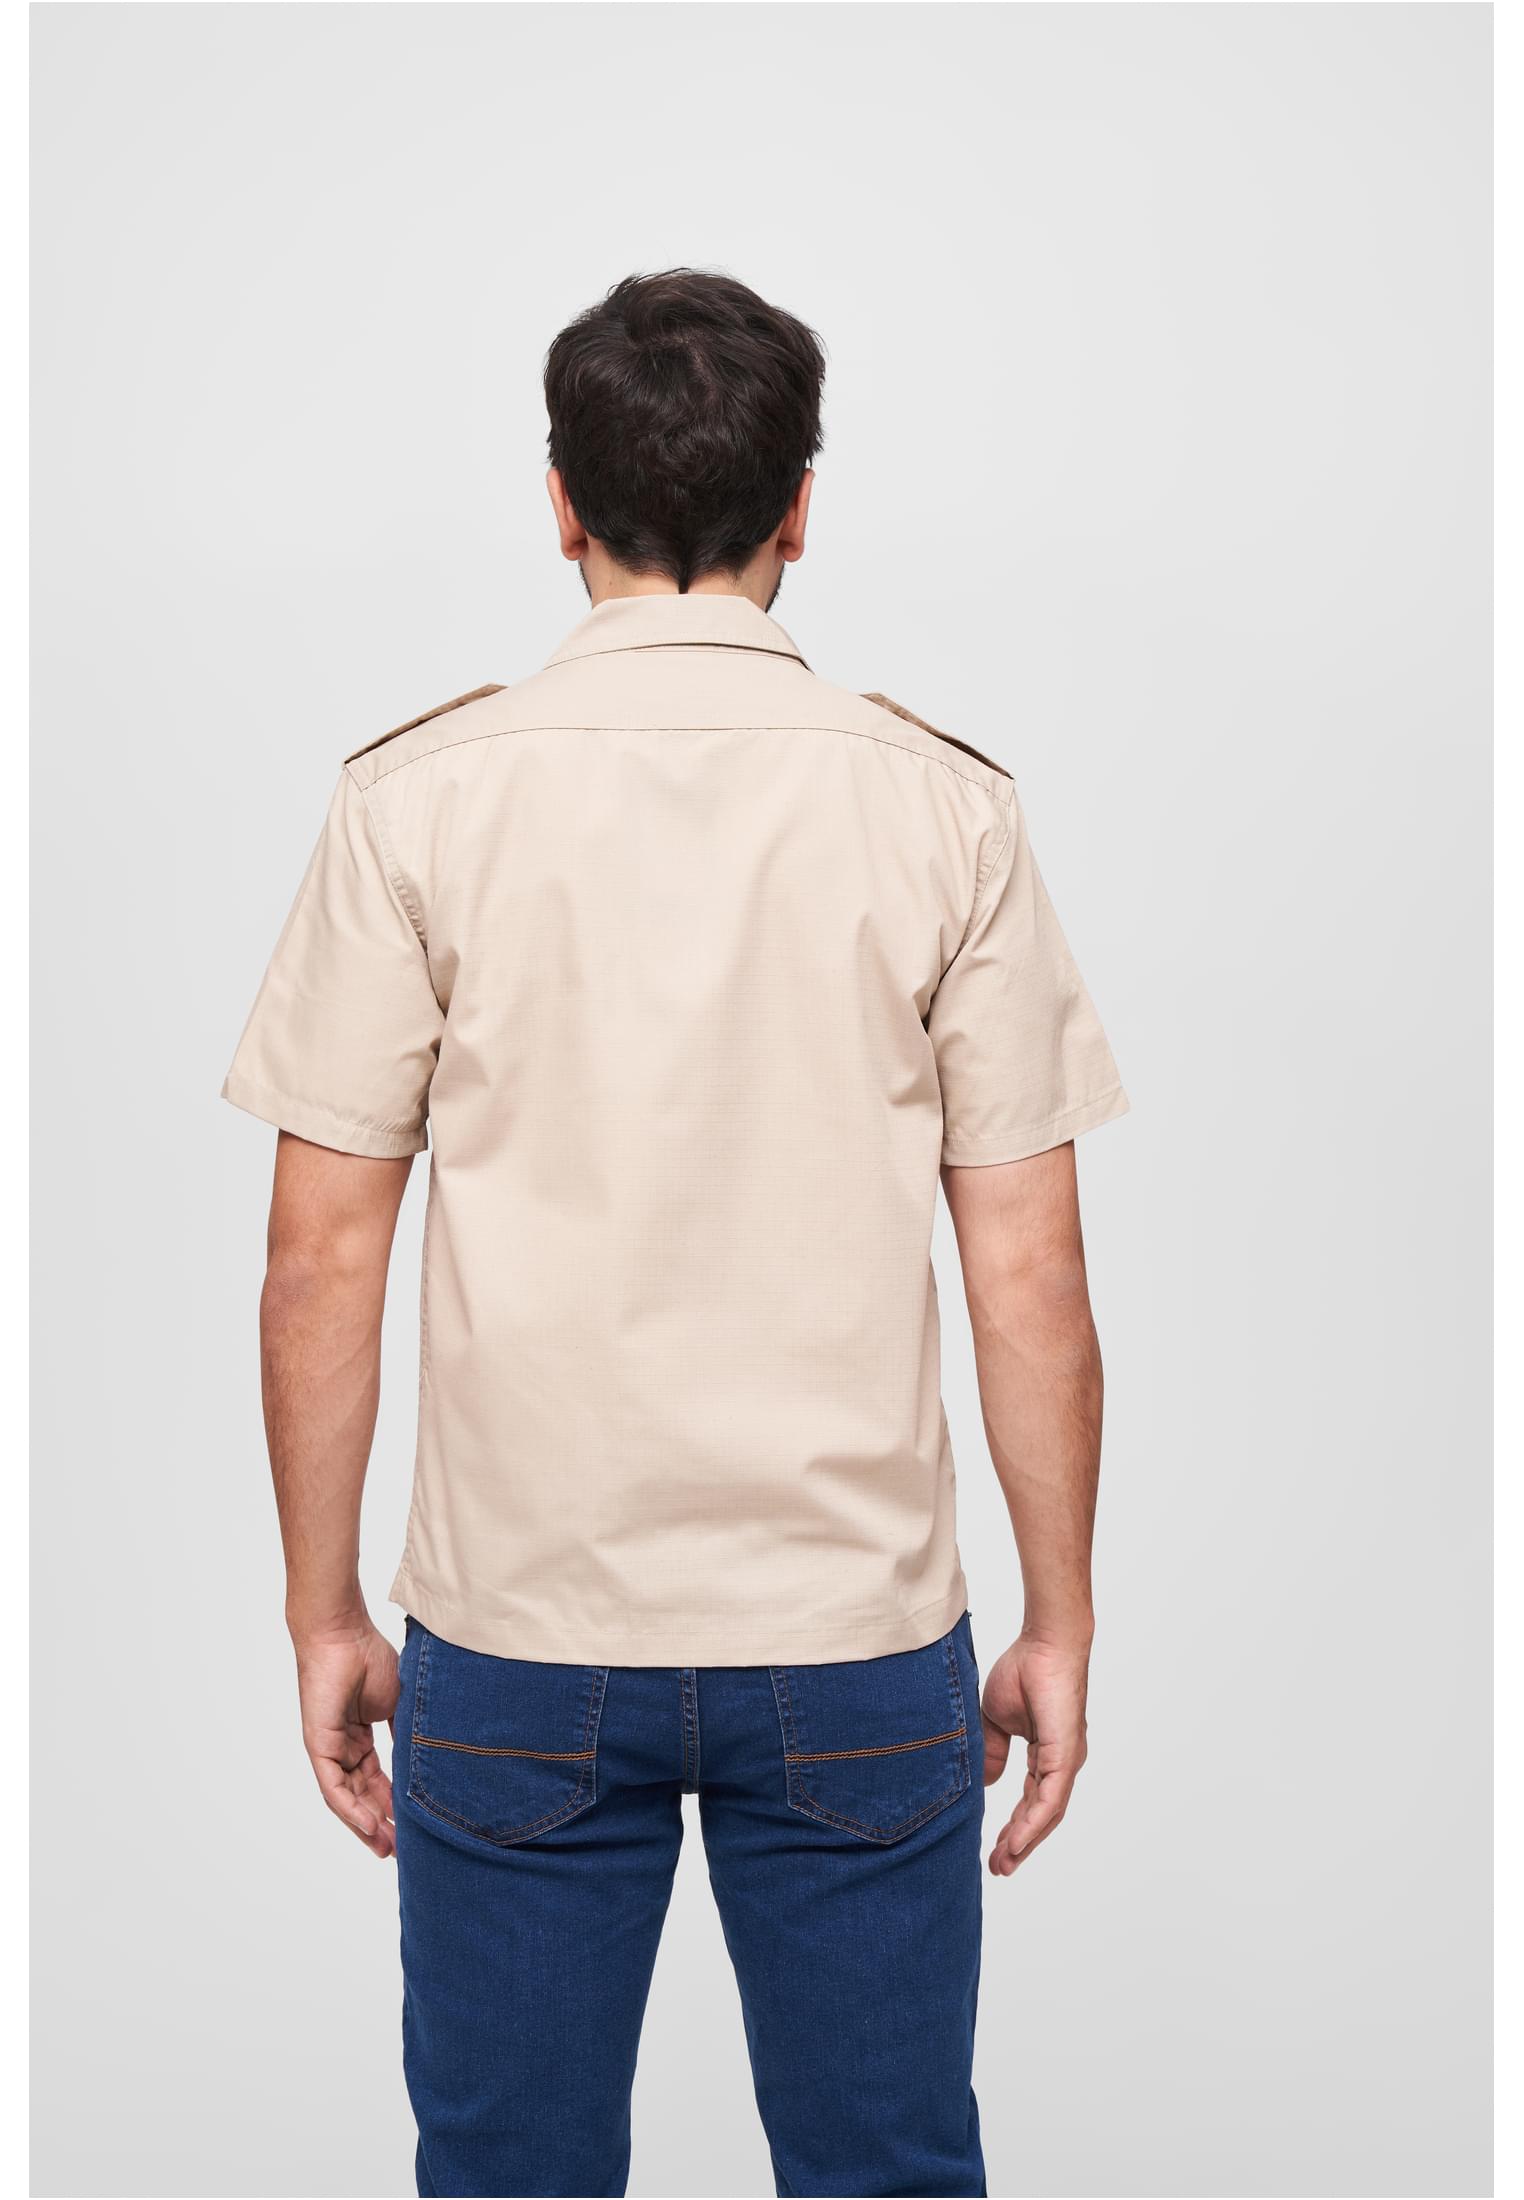 Hemden US Shirt Ripstop shortsleeve in Farbe beige